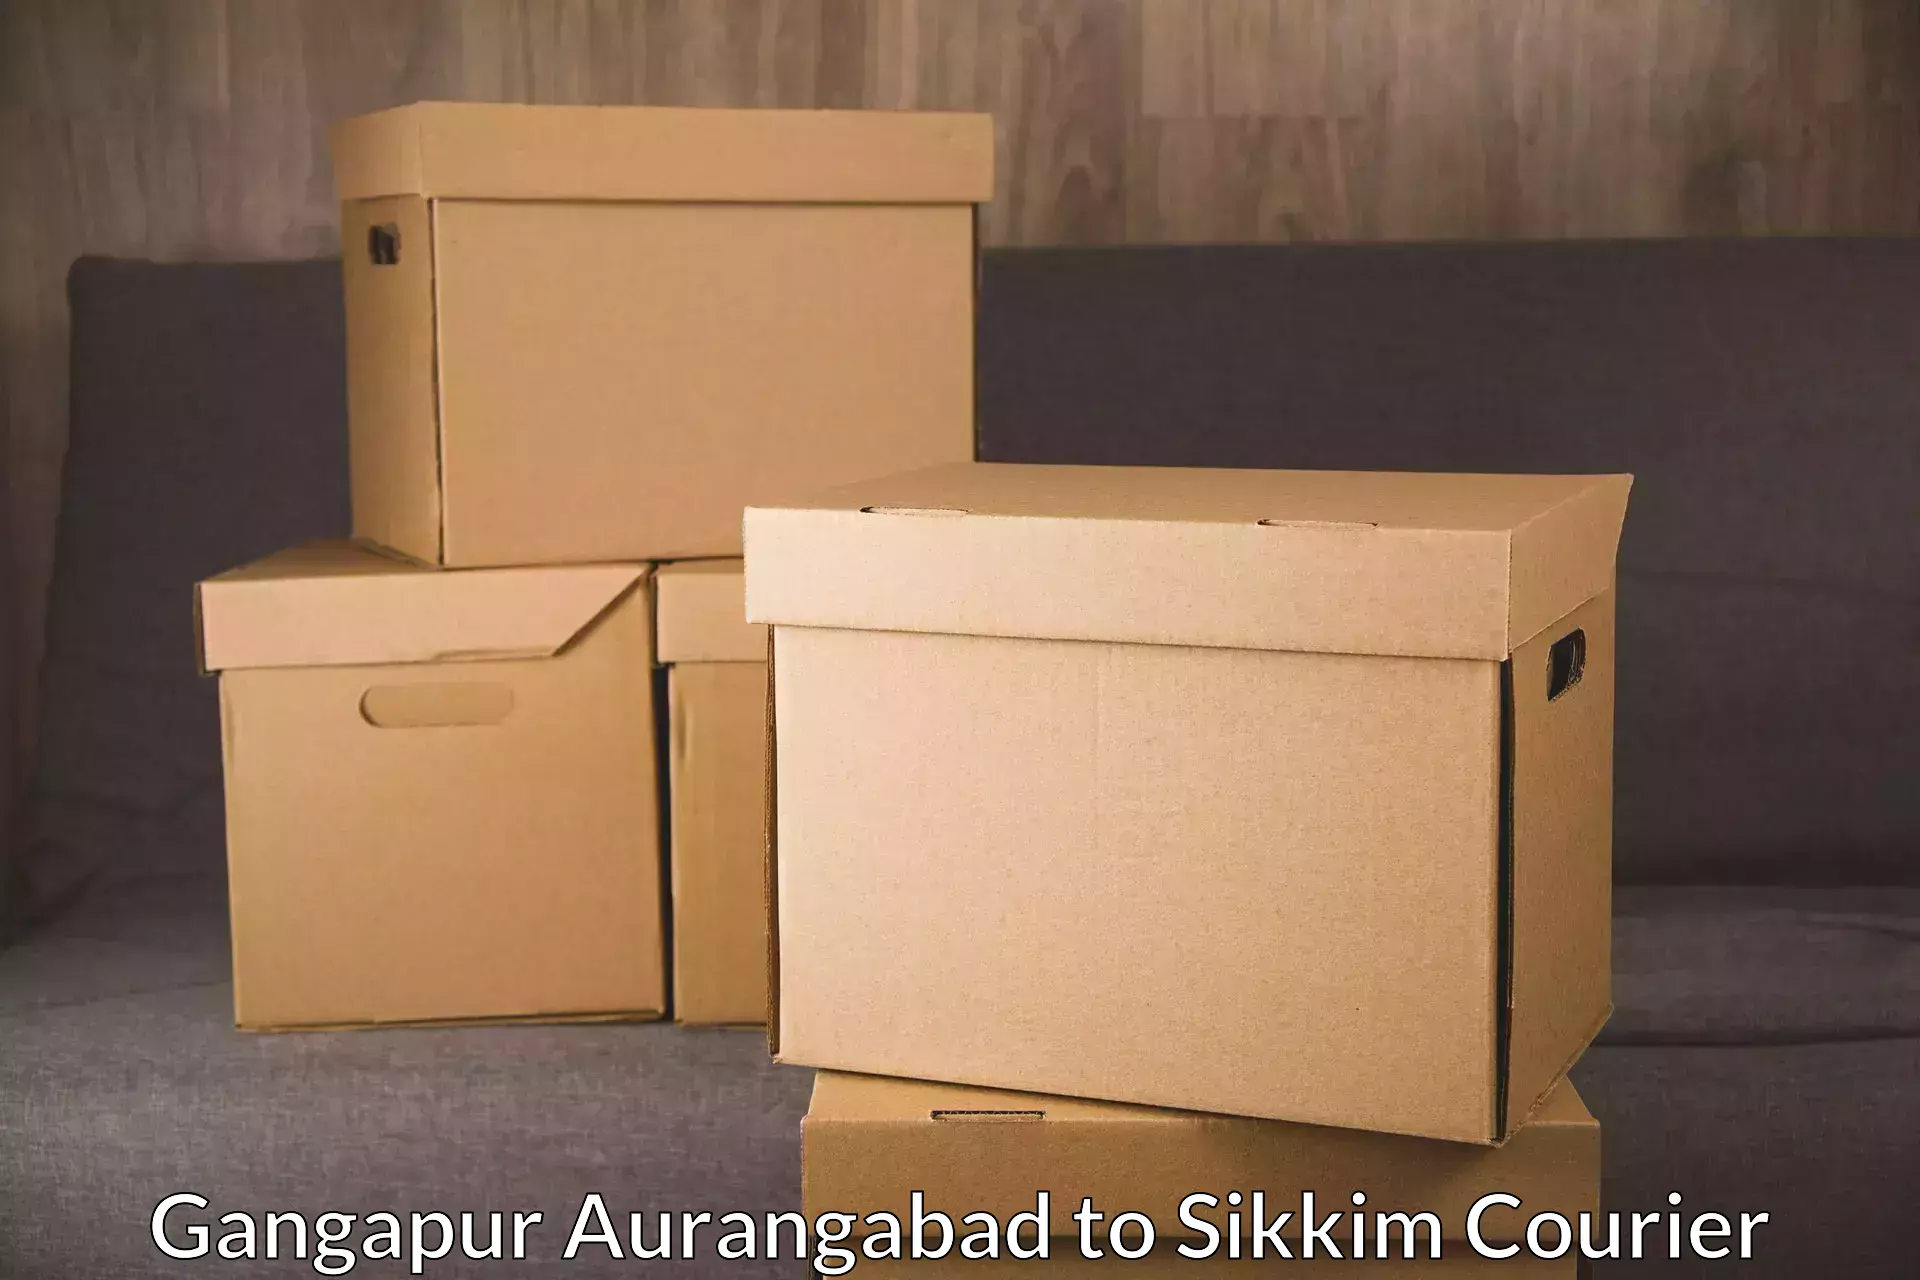 International parcel service Gangapur Aurangabad to Gangtok